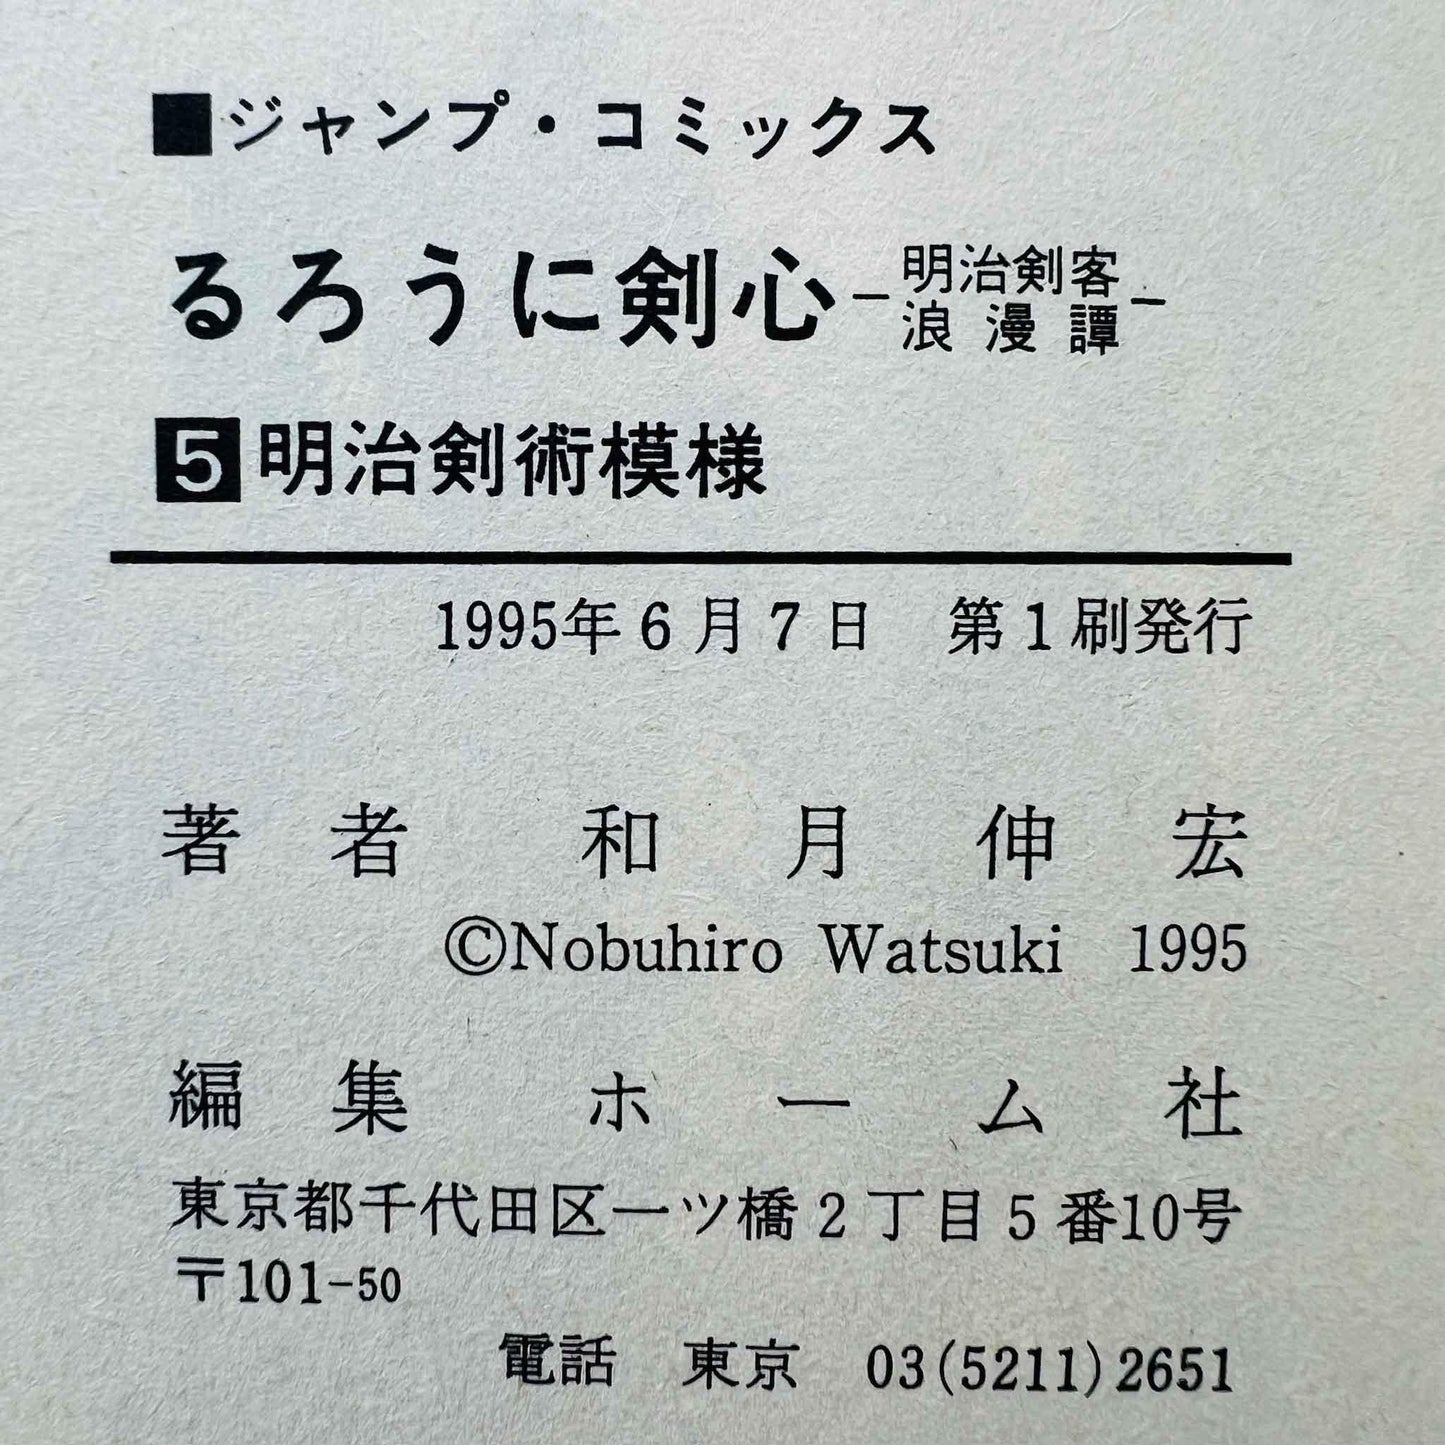 Rurouni Kenshin - Volume 05 - 1stPrint.net - 1st First Print Edition Manga Store - M-KENSH-05-001